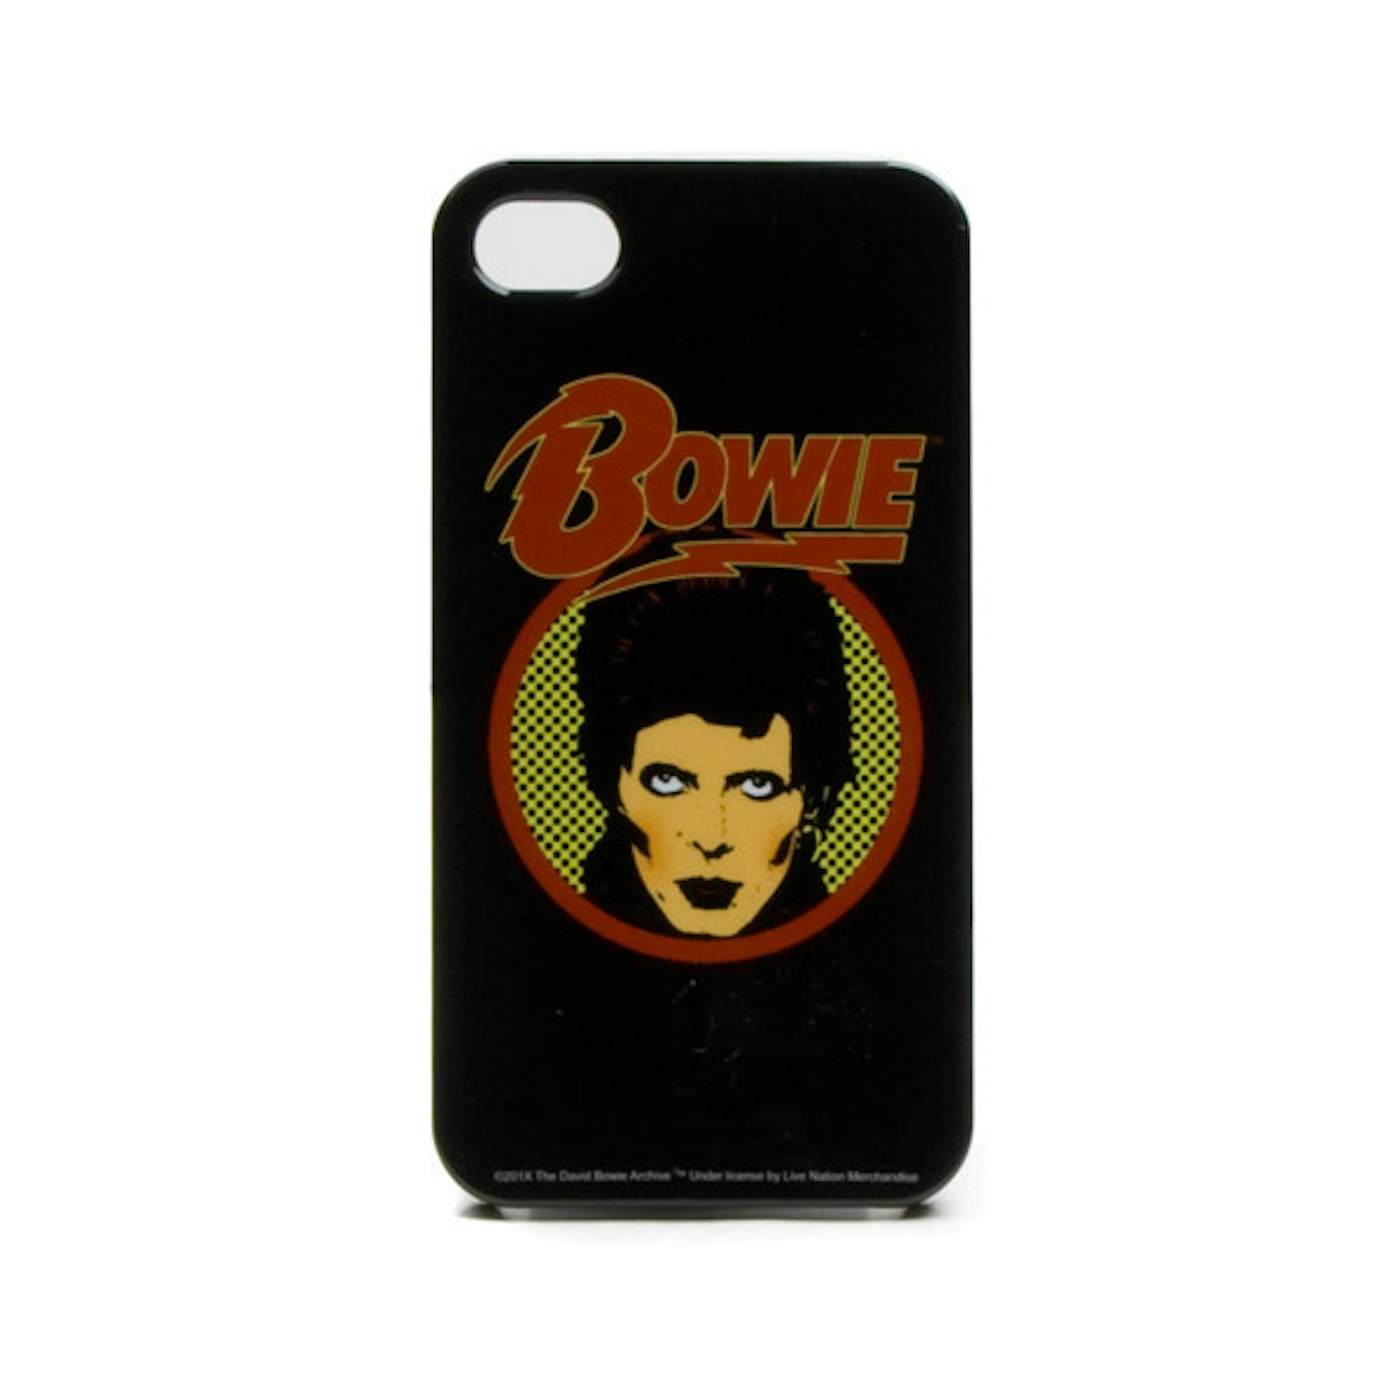 David Bowie iPhone 4/4S case